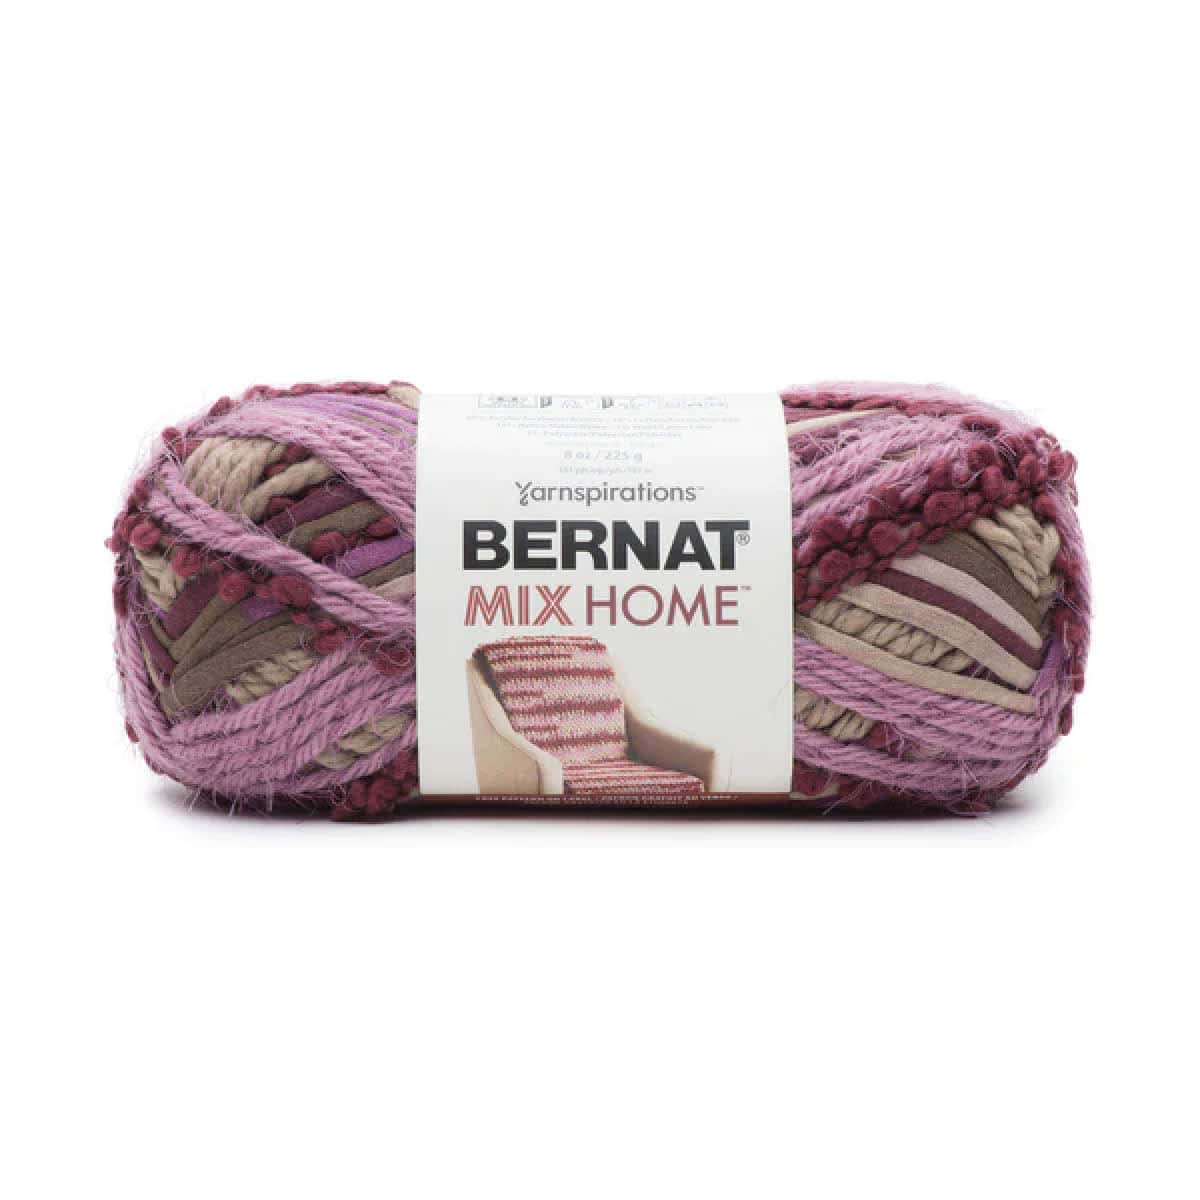 Bernat Mix Home Yarn Product